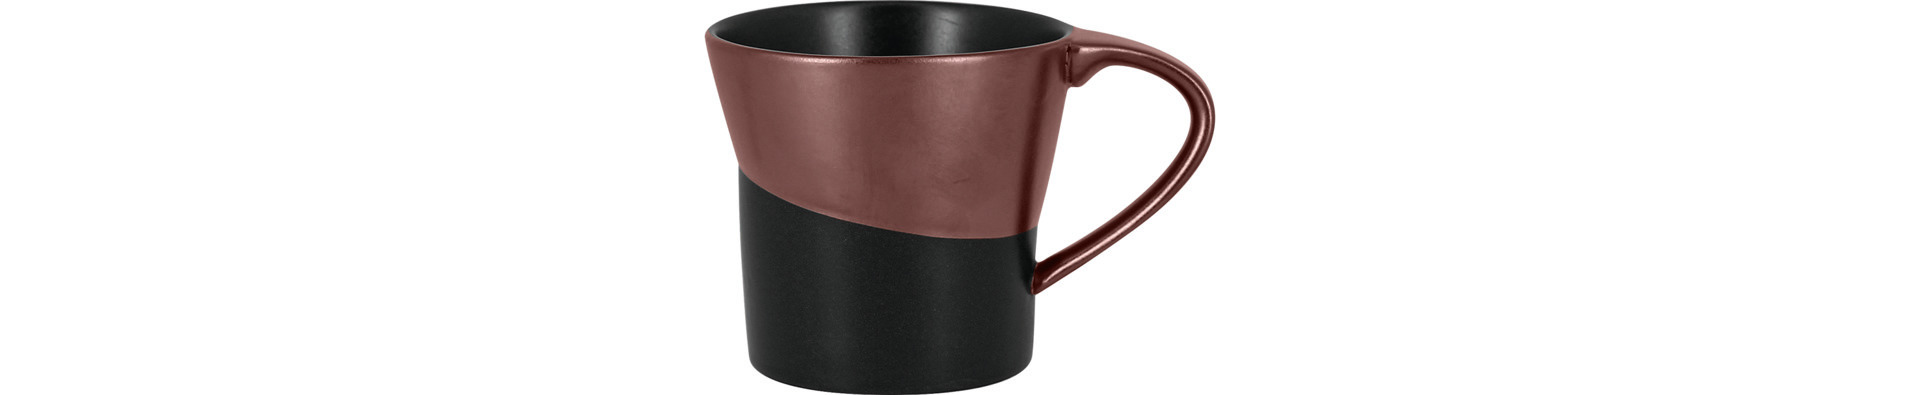 Kaffeetasse 83 mm / 0,23 l schwarz / bronze